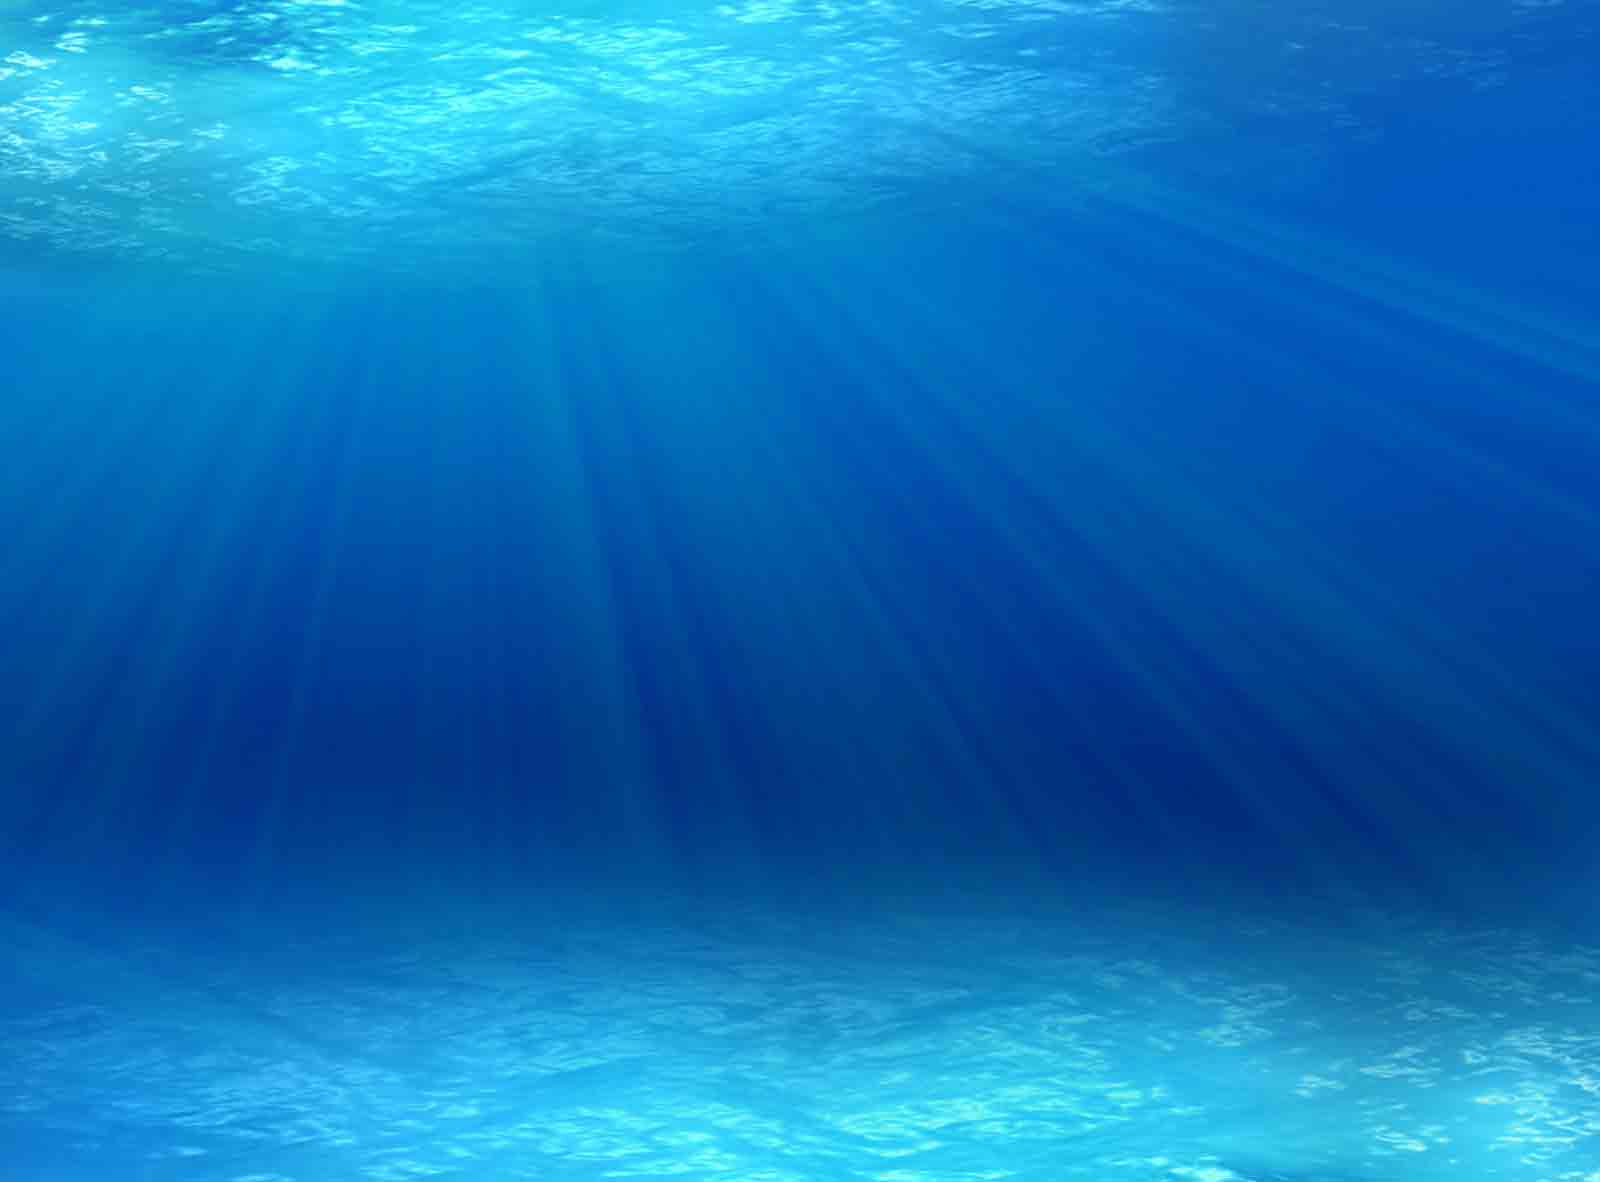 deep sea blue